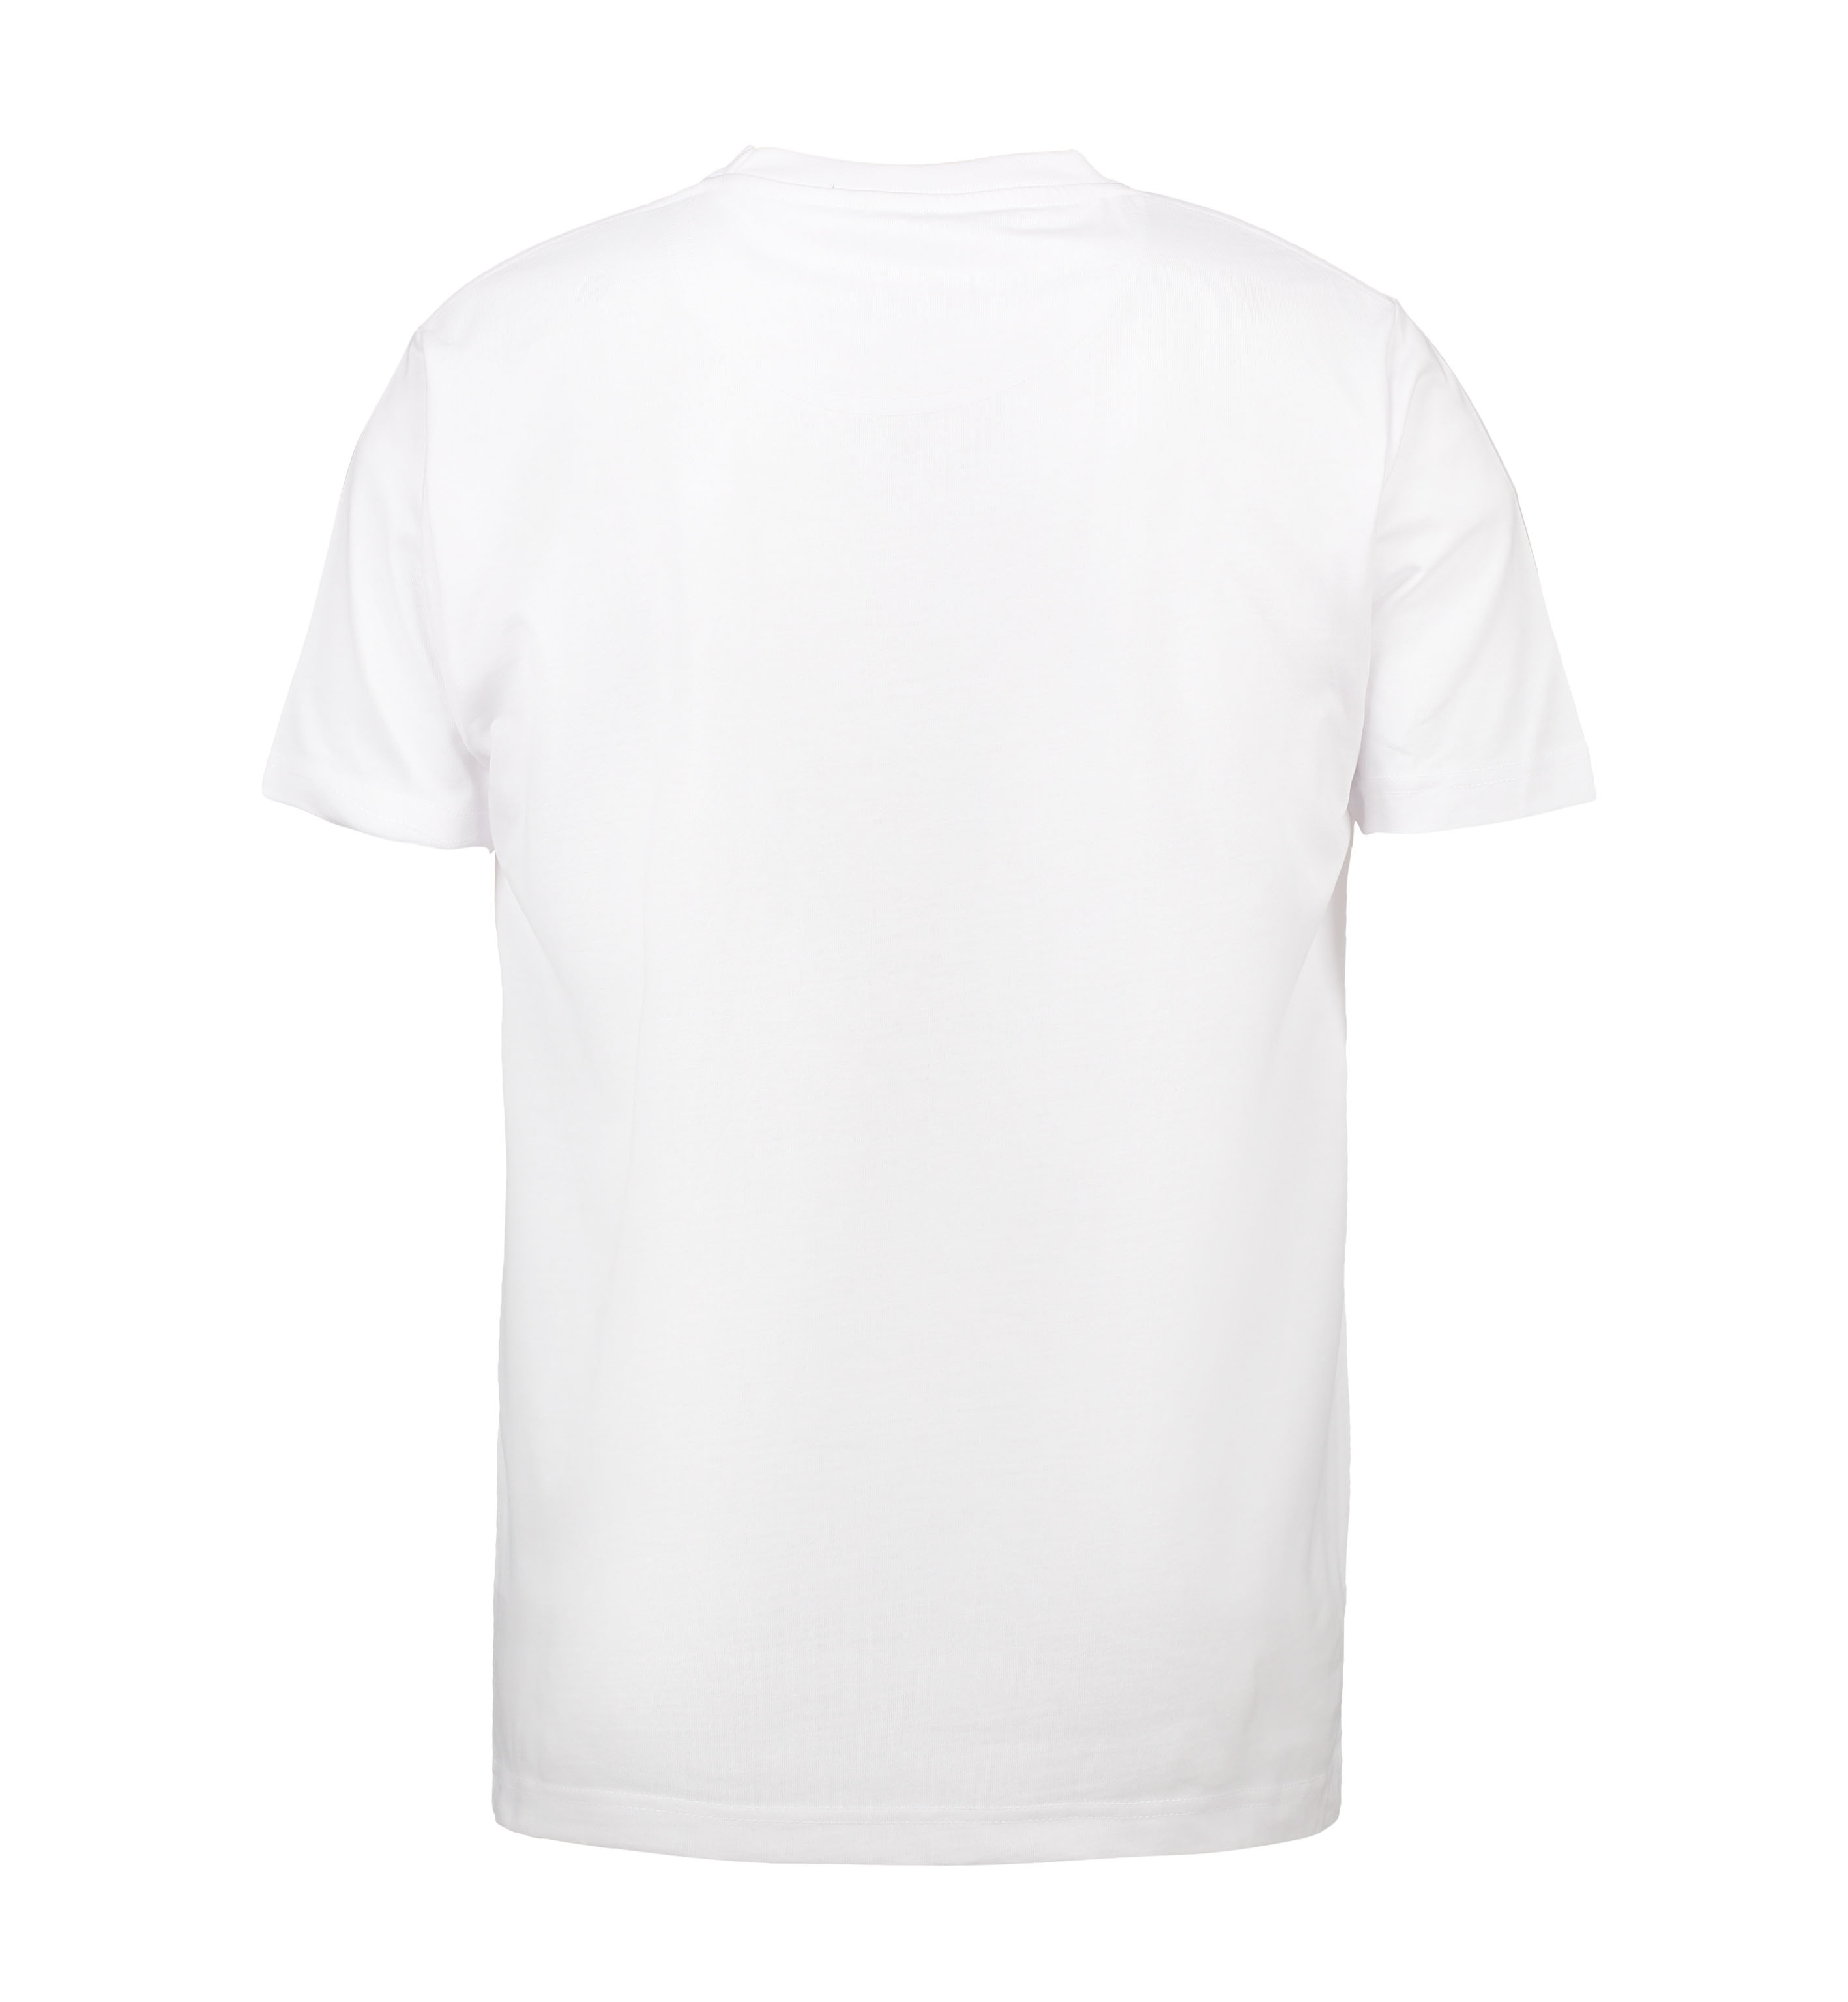 Erzquell Pils T-Shirt (inkl. Druck)